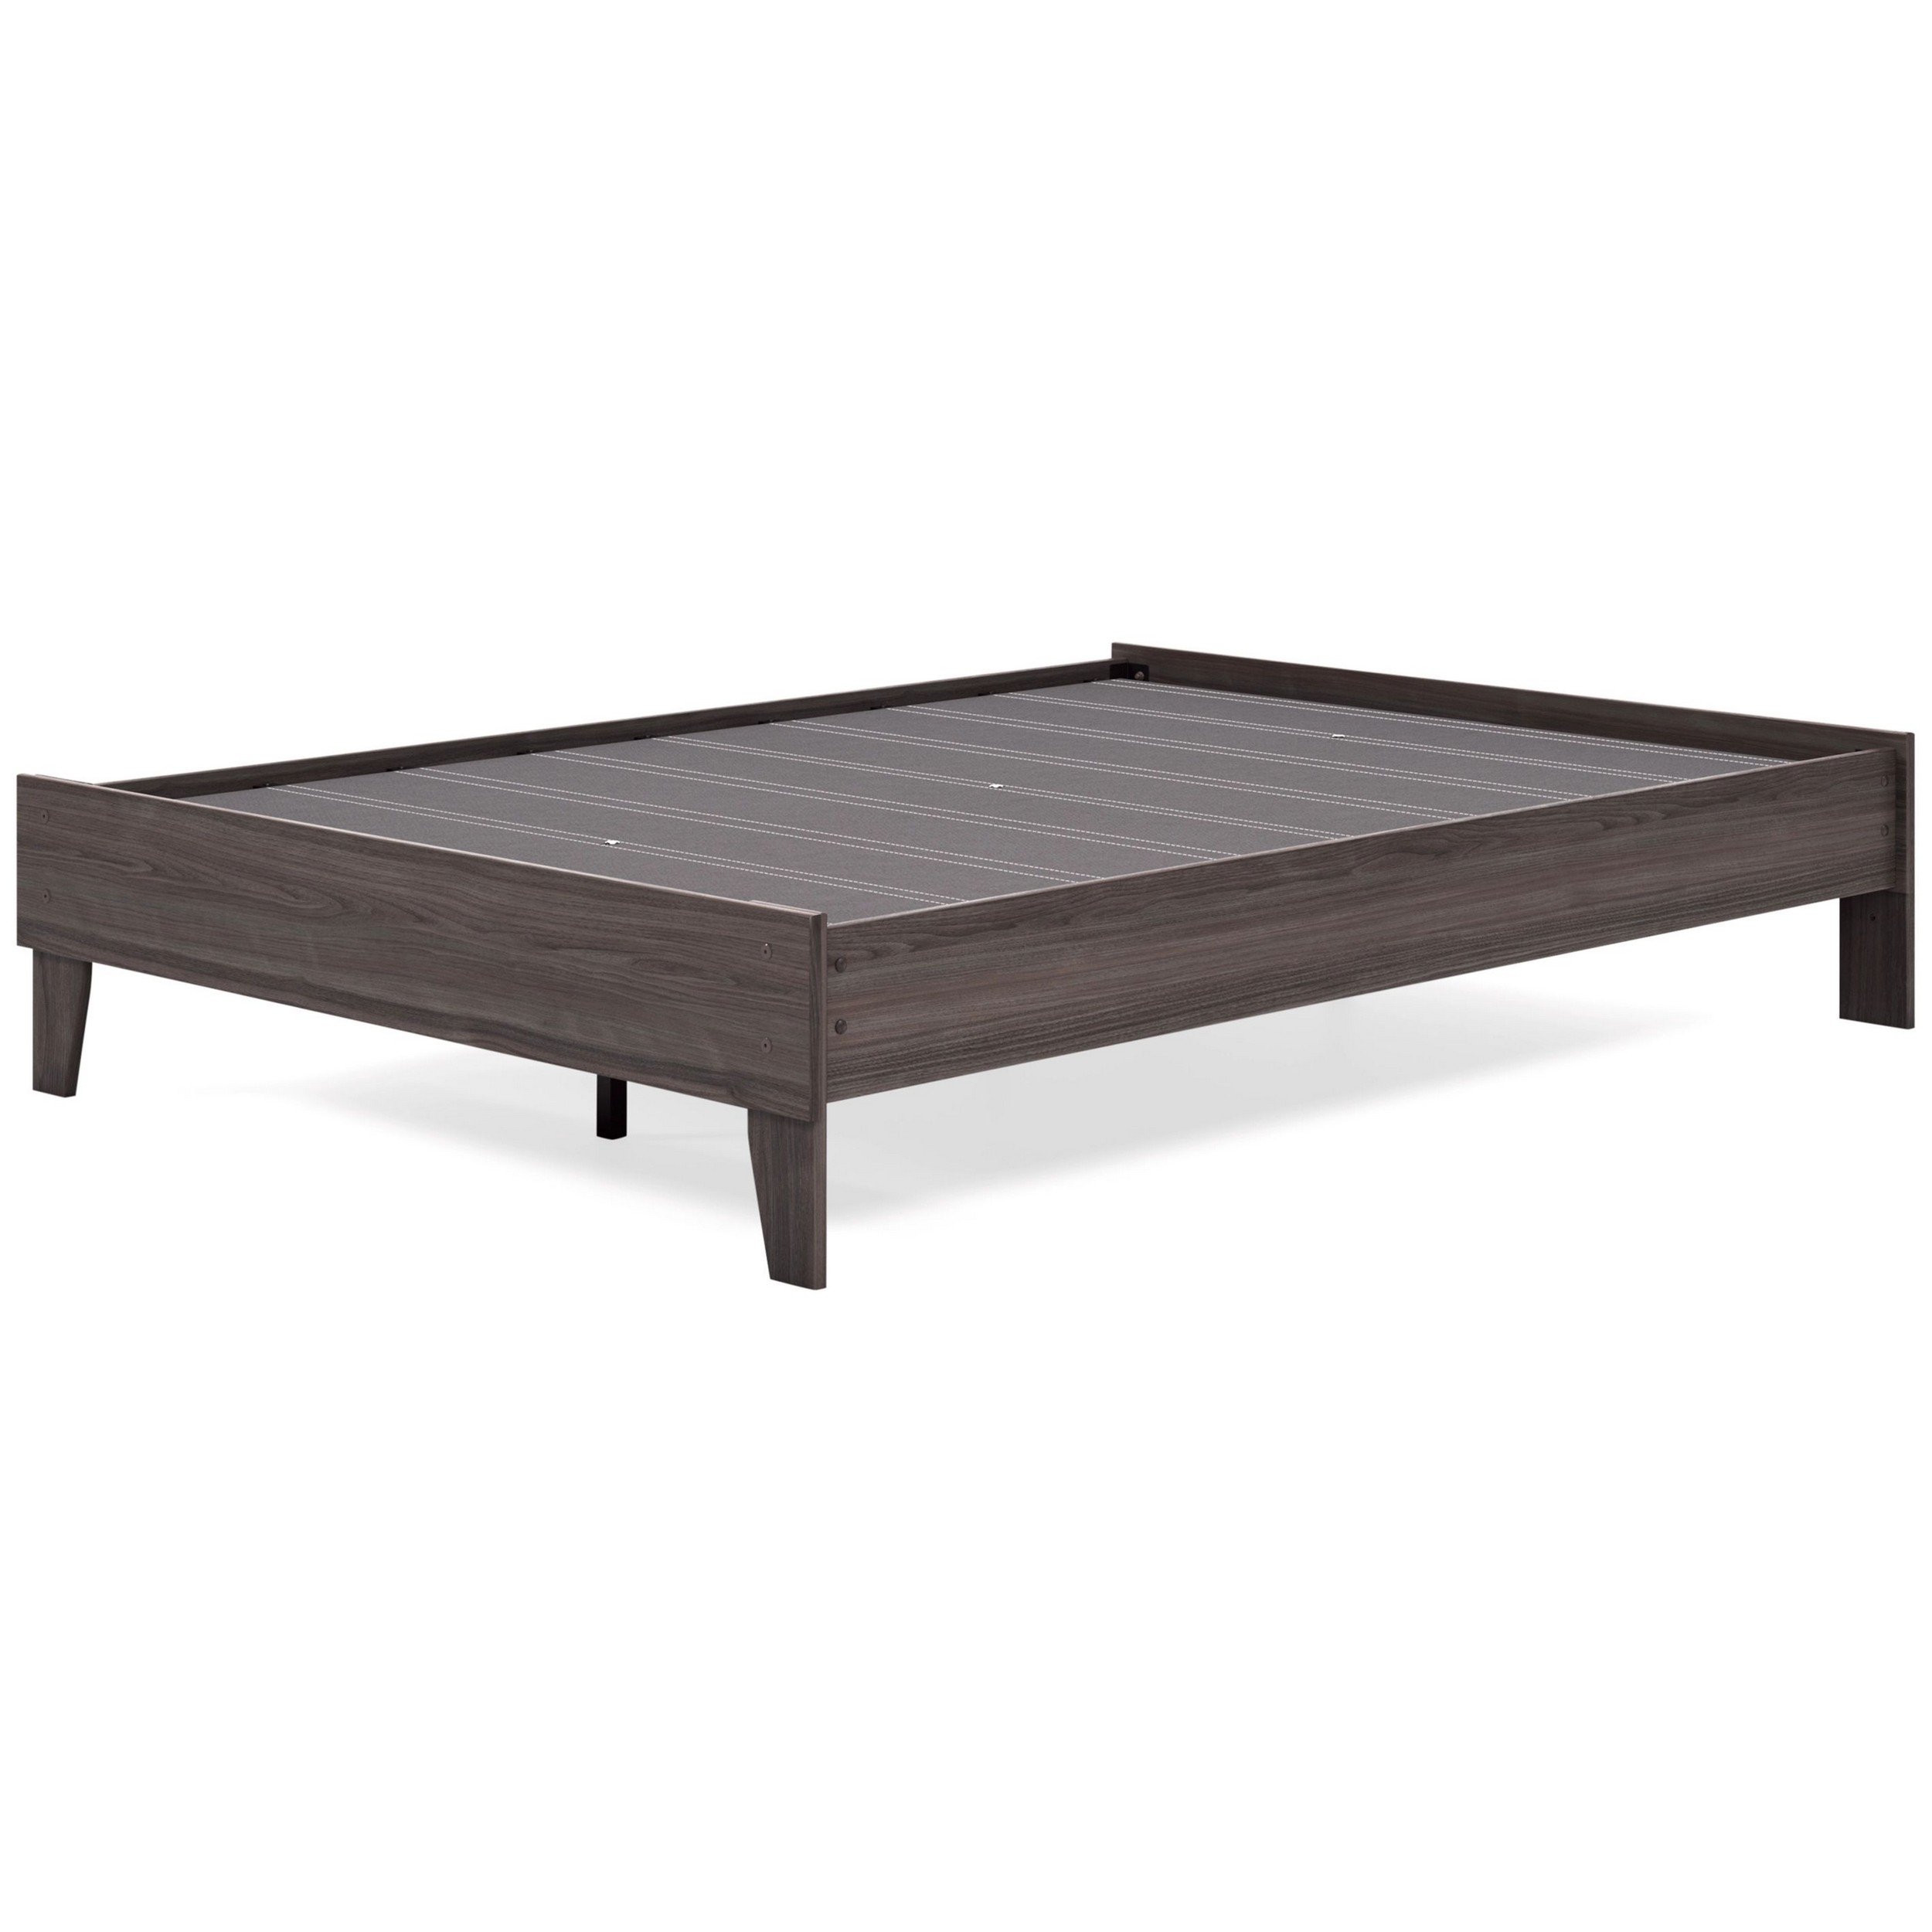 Zof Full Size Platform Bed, Low Profile, Footboard, Rails, Rustic Gray Wood- Saltoro Sherpi